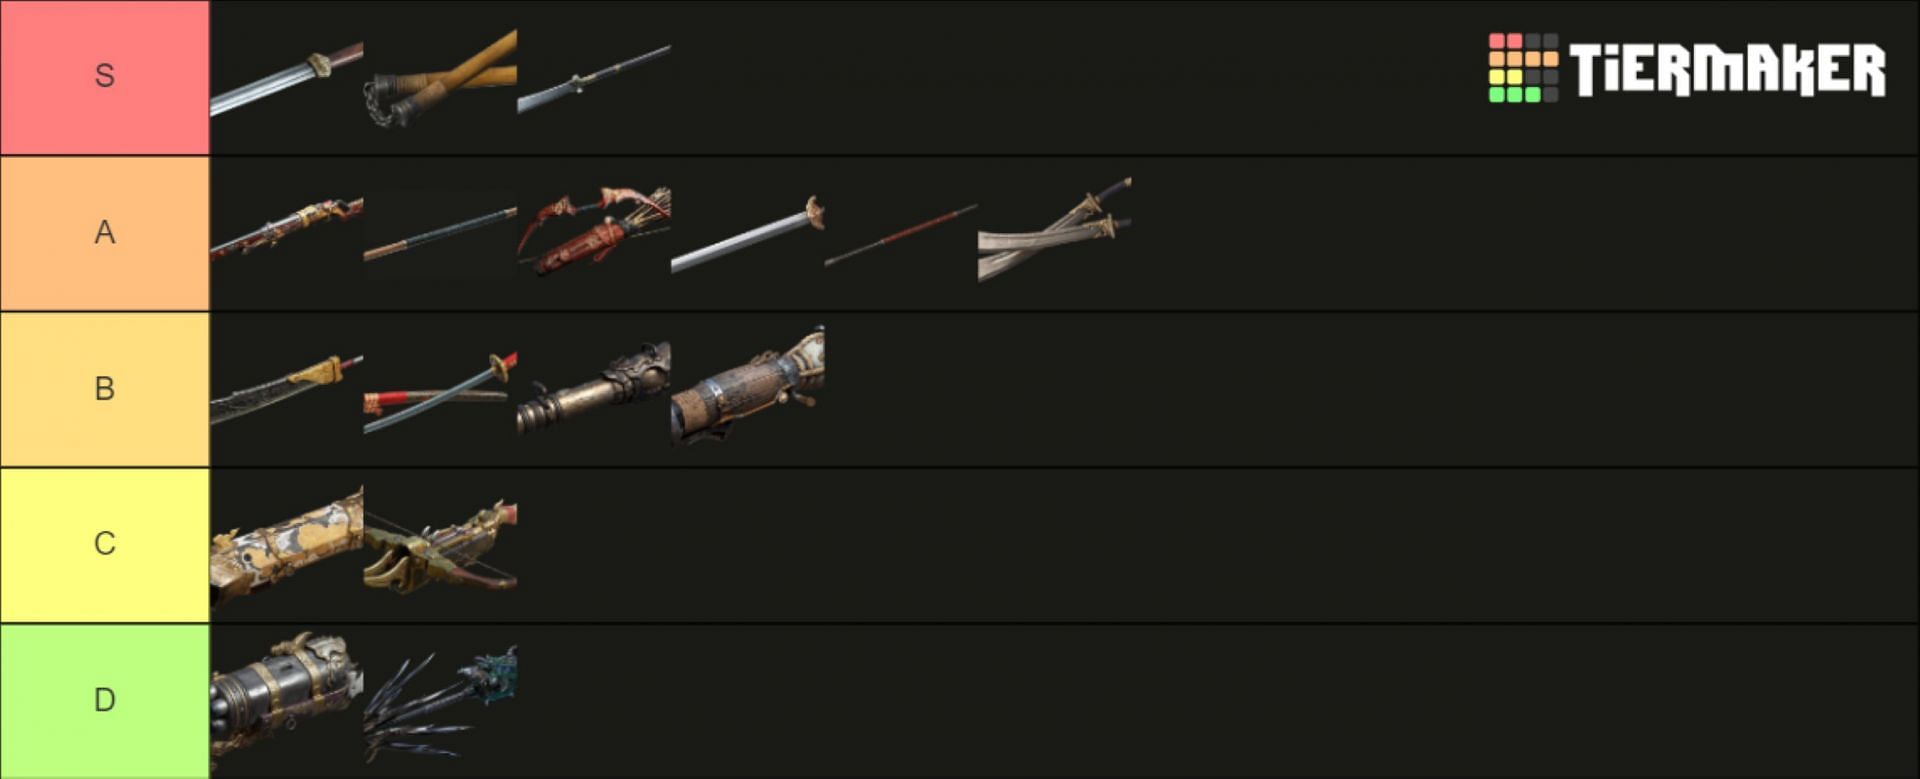 Weapon tier list